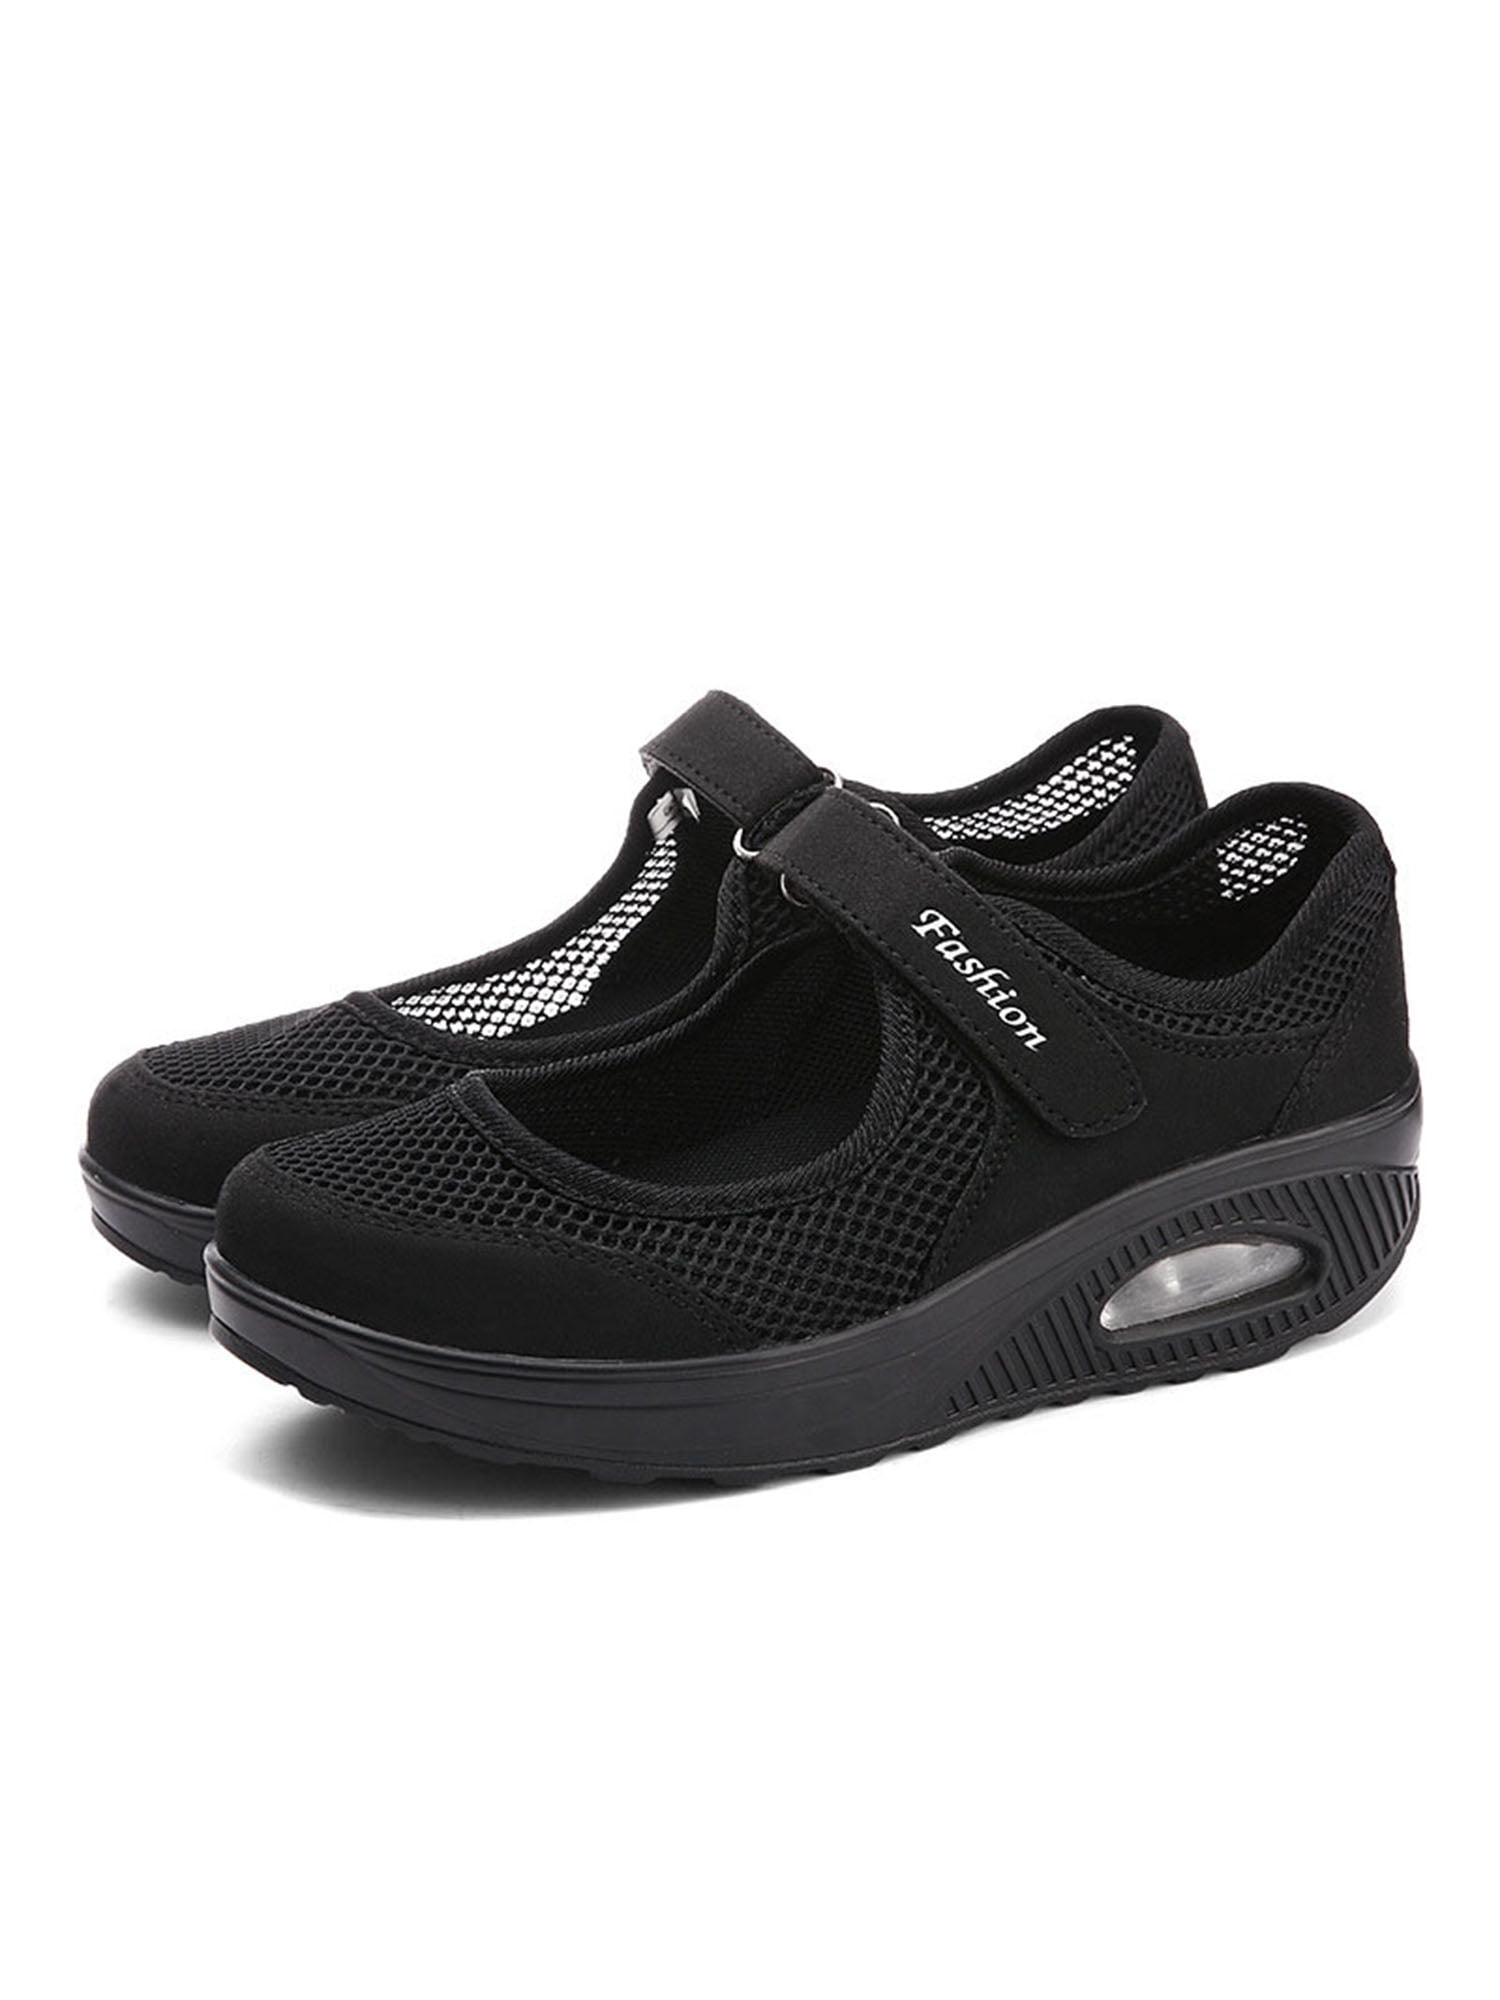 Mary Jane Shoes for Womens Wide Width Shoes Elderly Women Casual Walking  Sneakers Black Size  